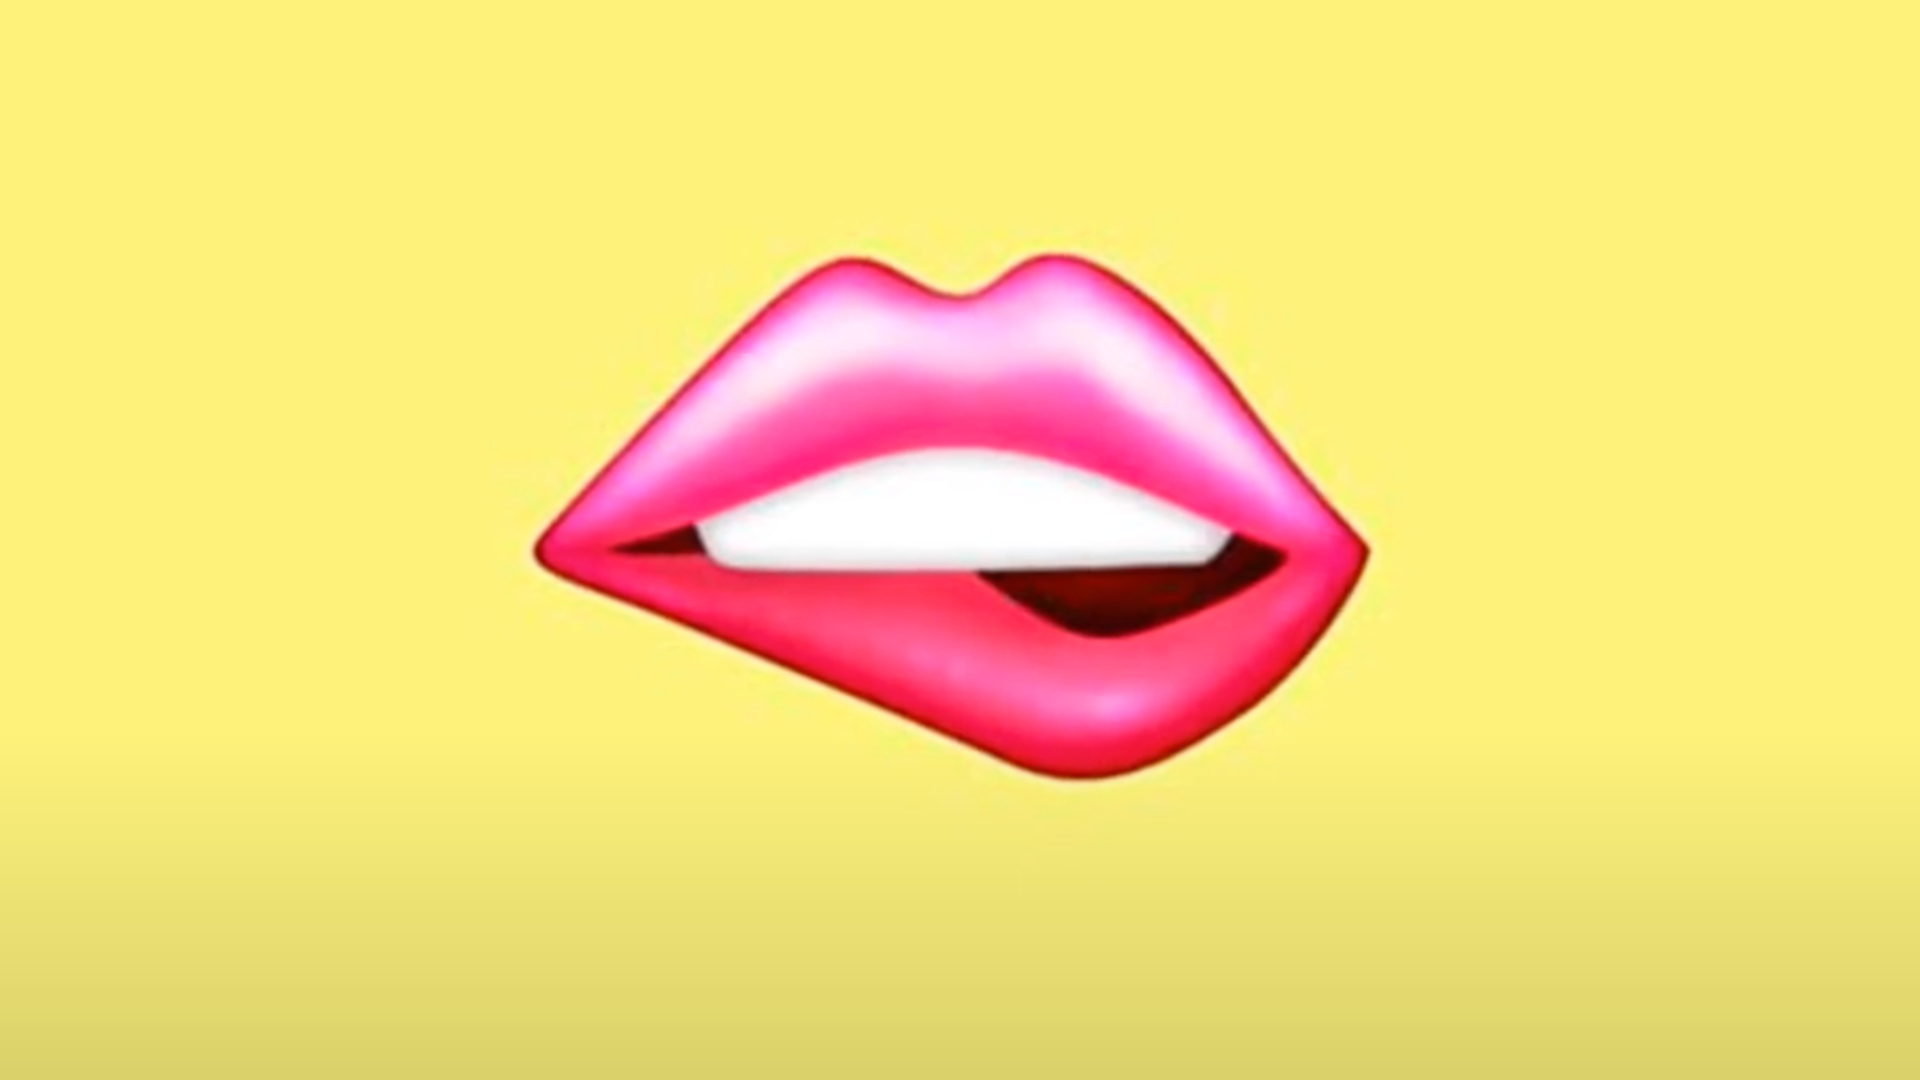 Biting lip emoji